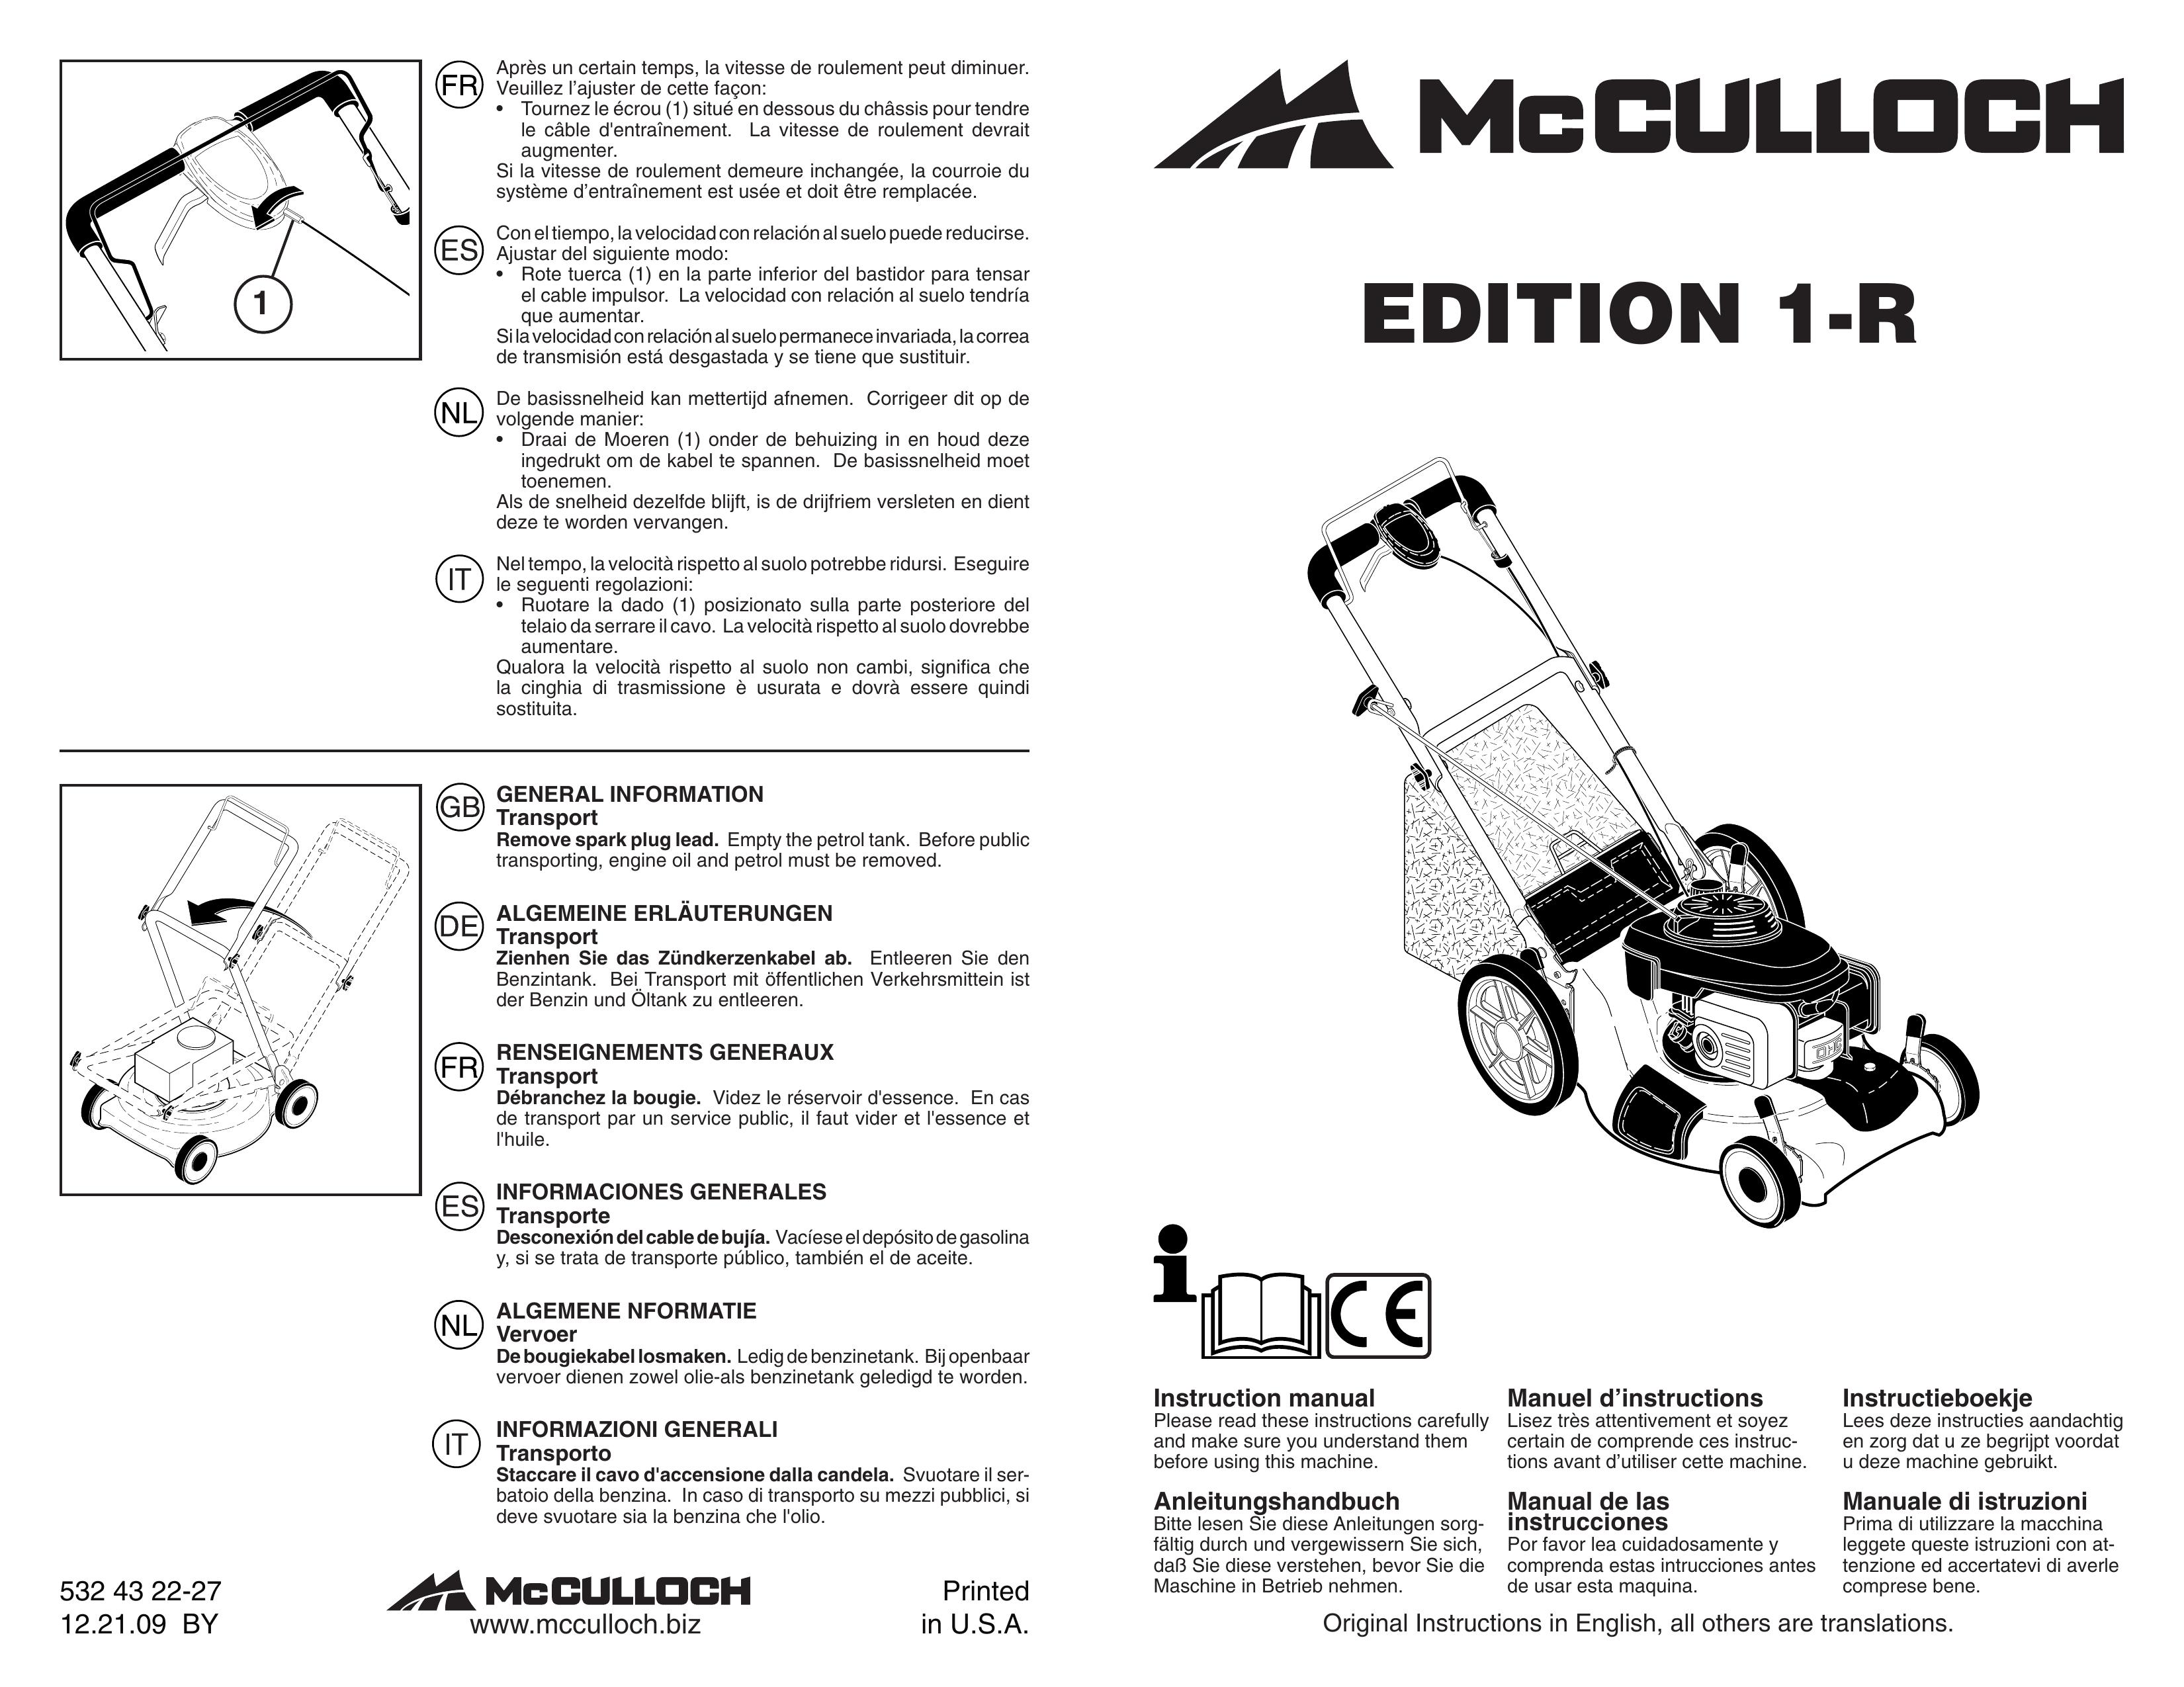 McCulloch 1-R Lawn Mower User Manual